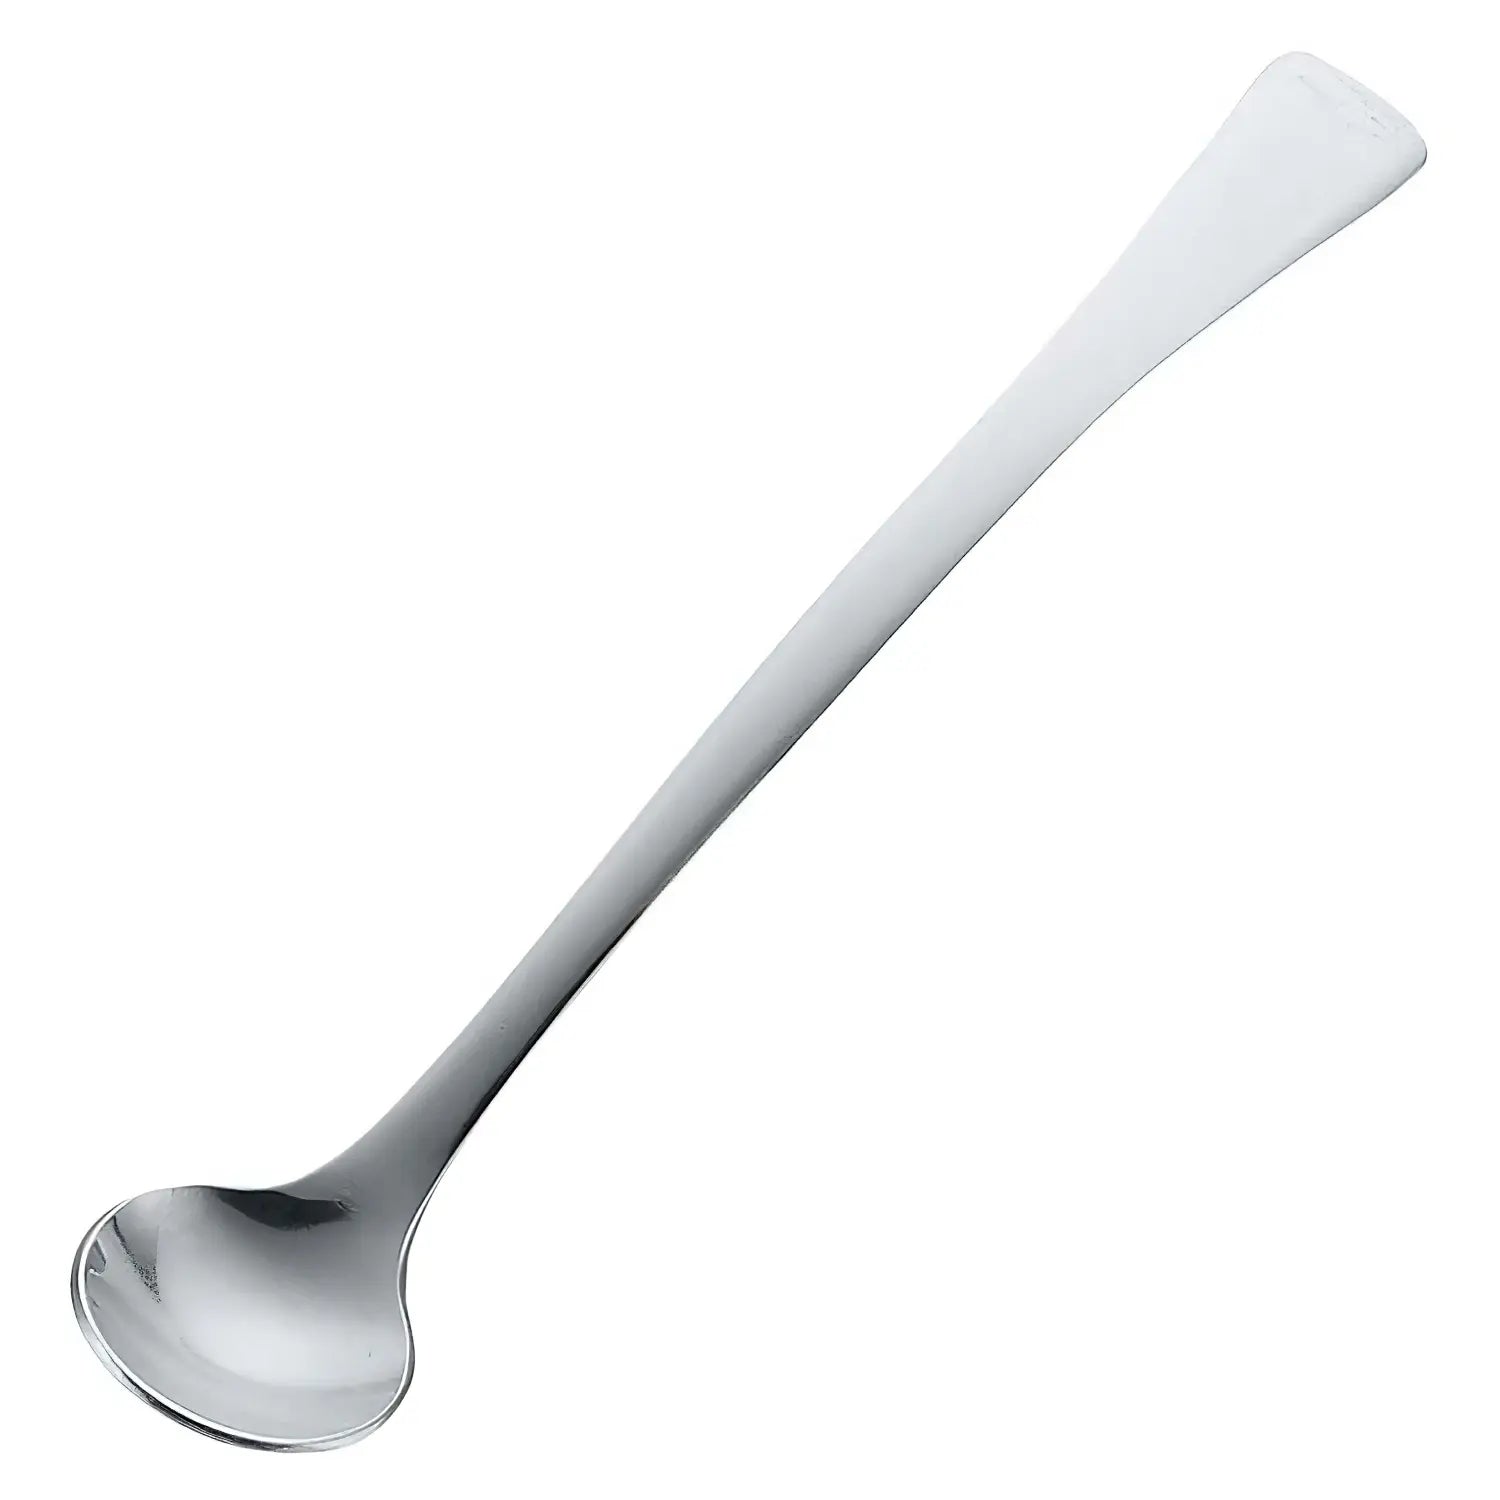 Takakuwa Stainless Steel Coffee Measuring Spoon with Long Handle